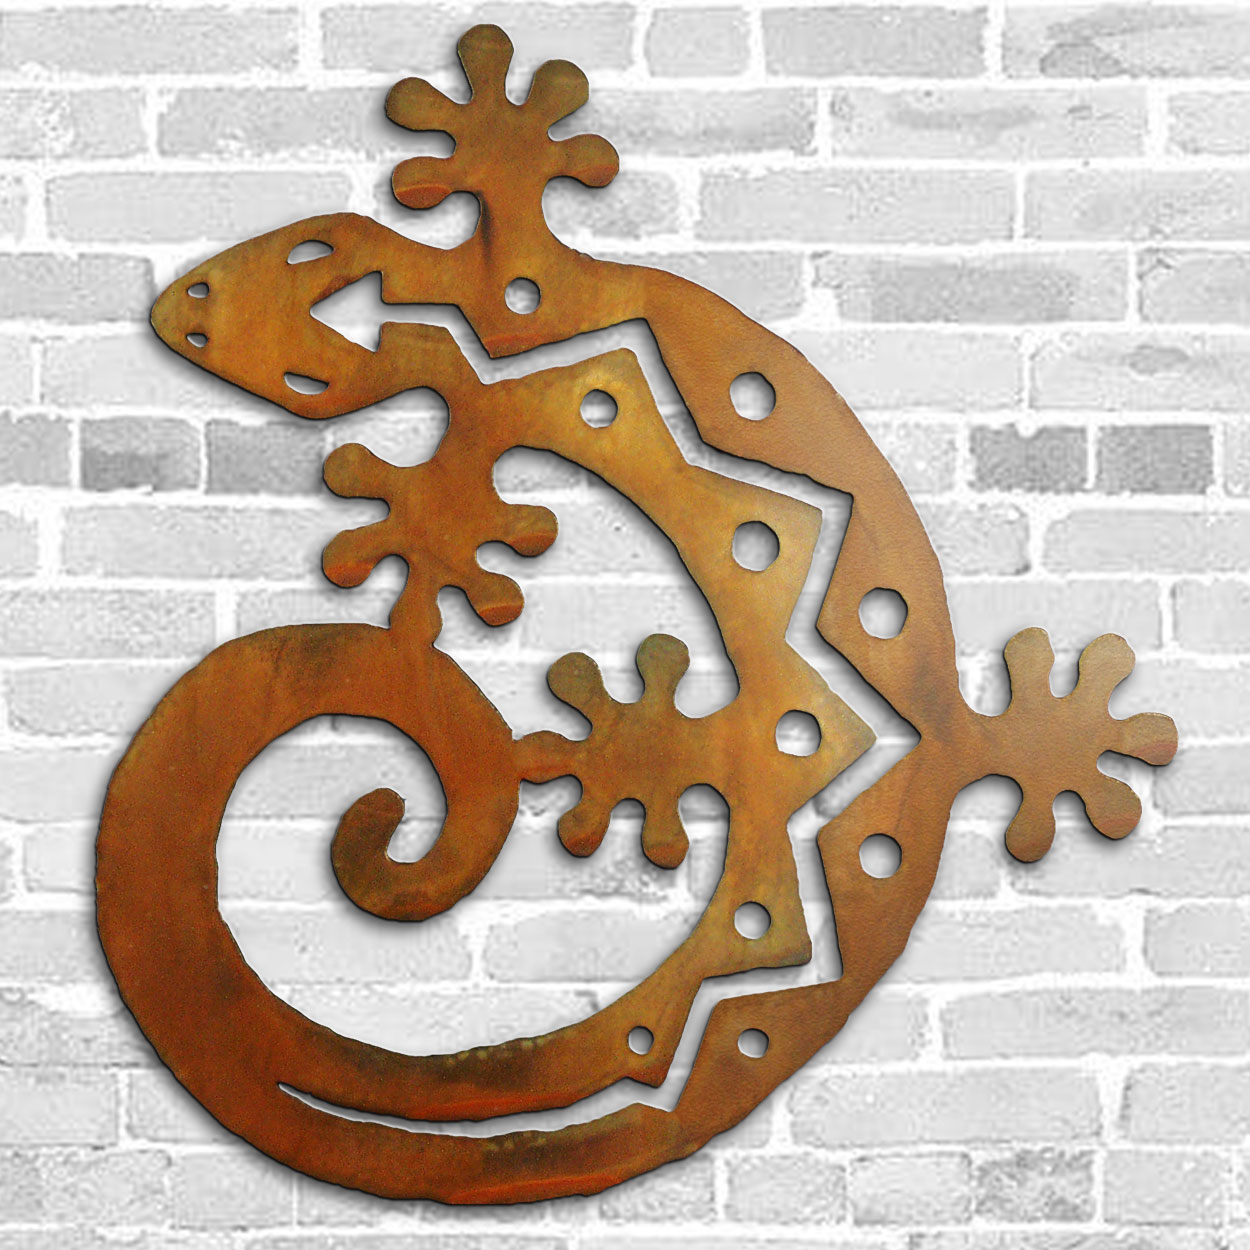 36in Jumbo C-Shaped Lizard Crooks Designs Floating Metal Wall Art in Rust Finish